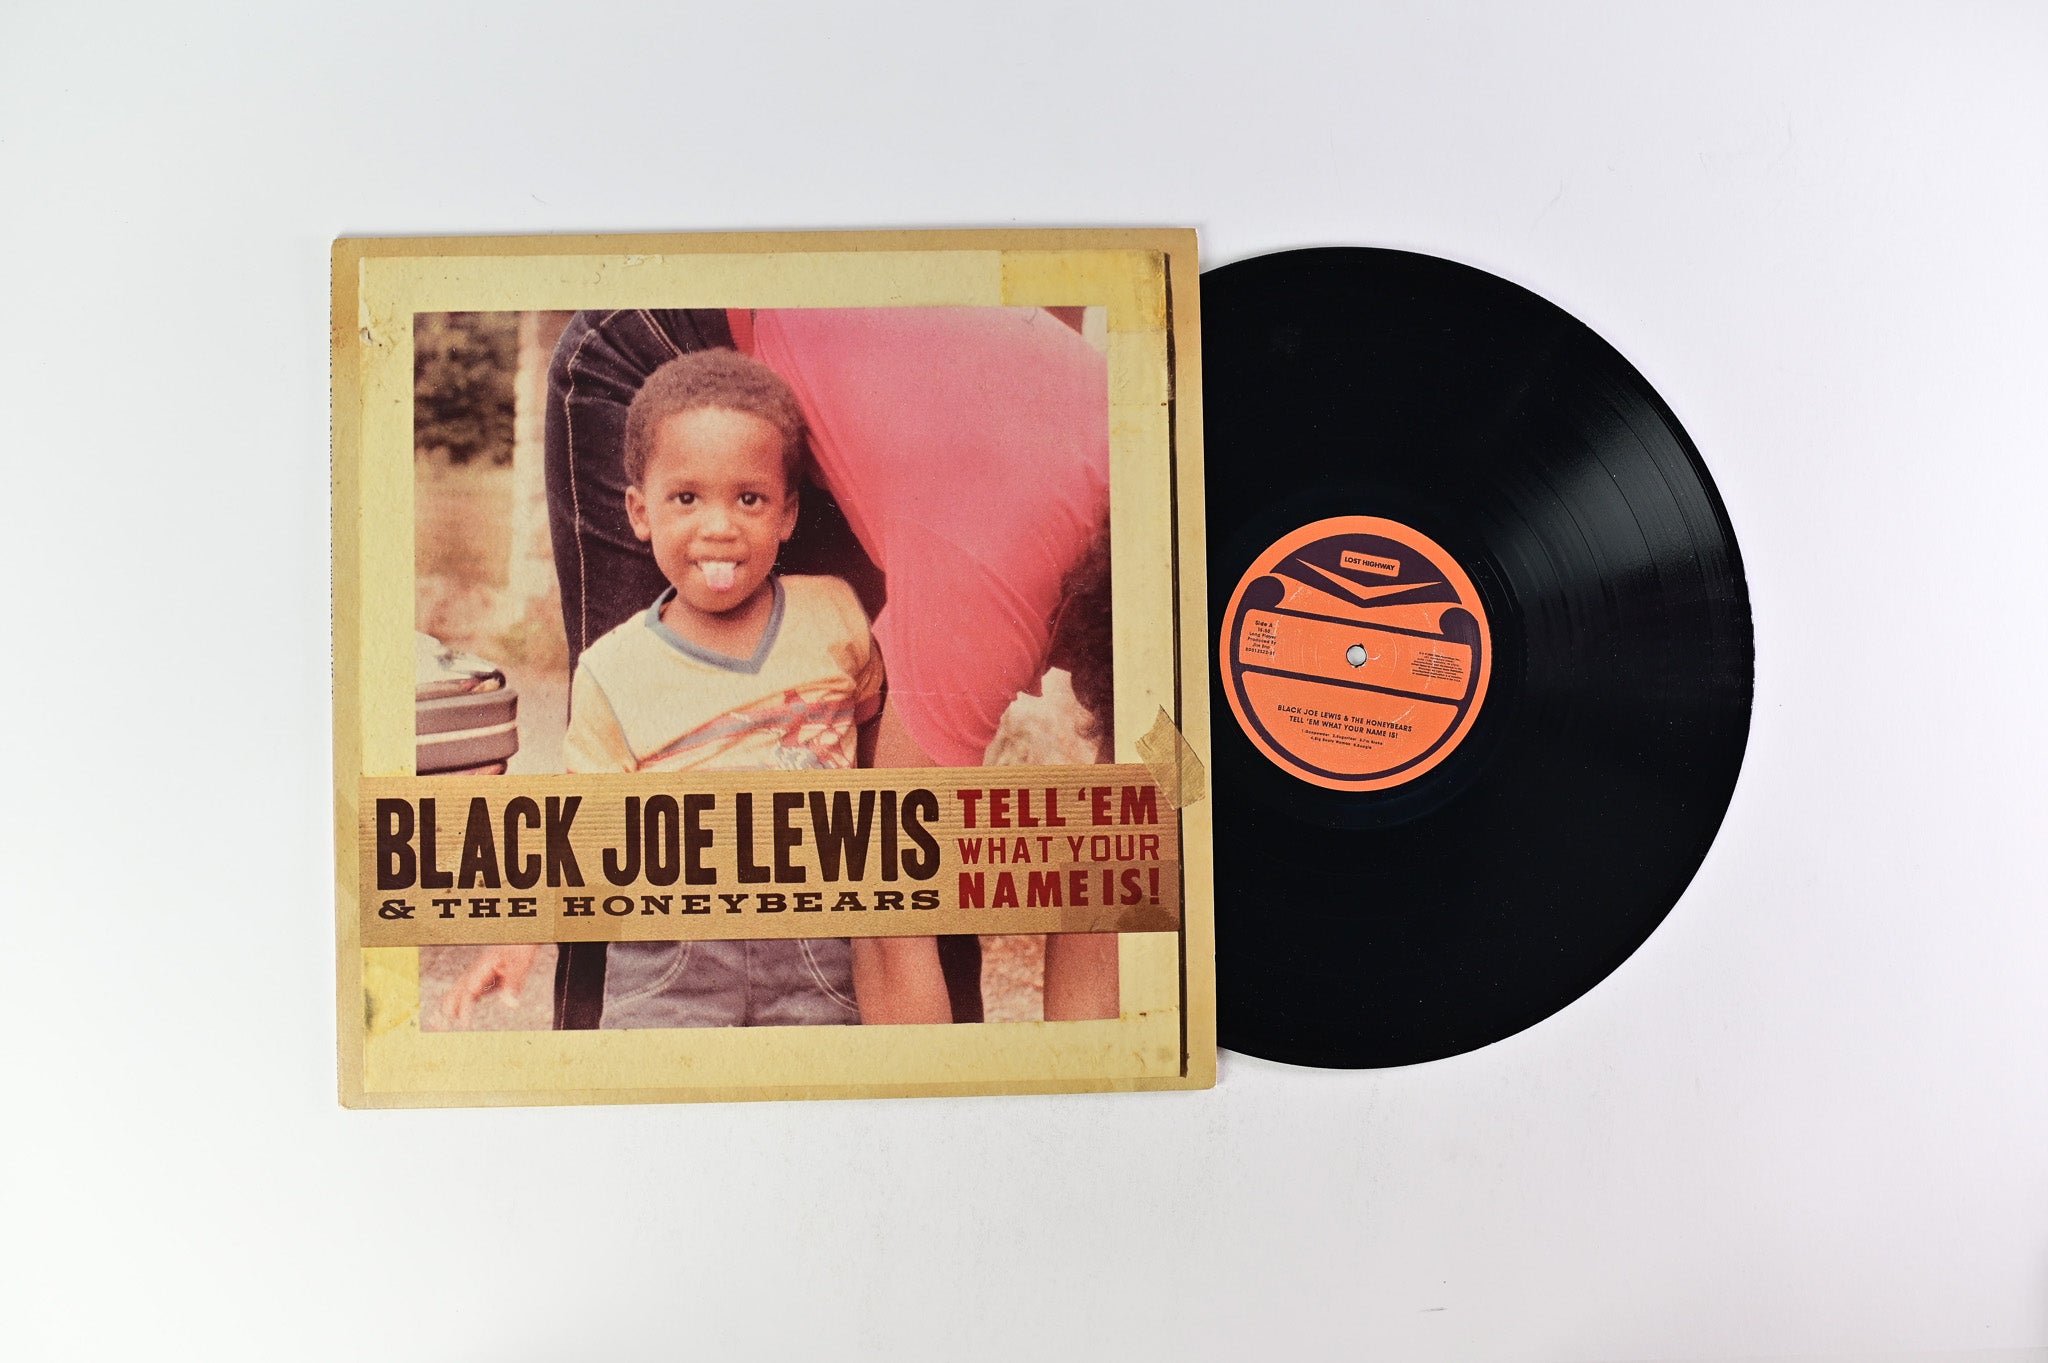 Black Joe Lewis & The Honeybears - Tell 'Em What Your Name Is! on Lost Highway